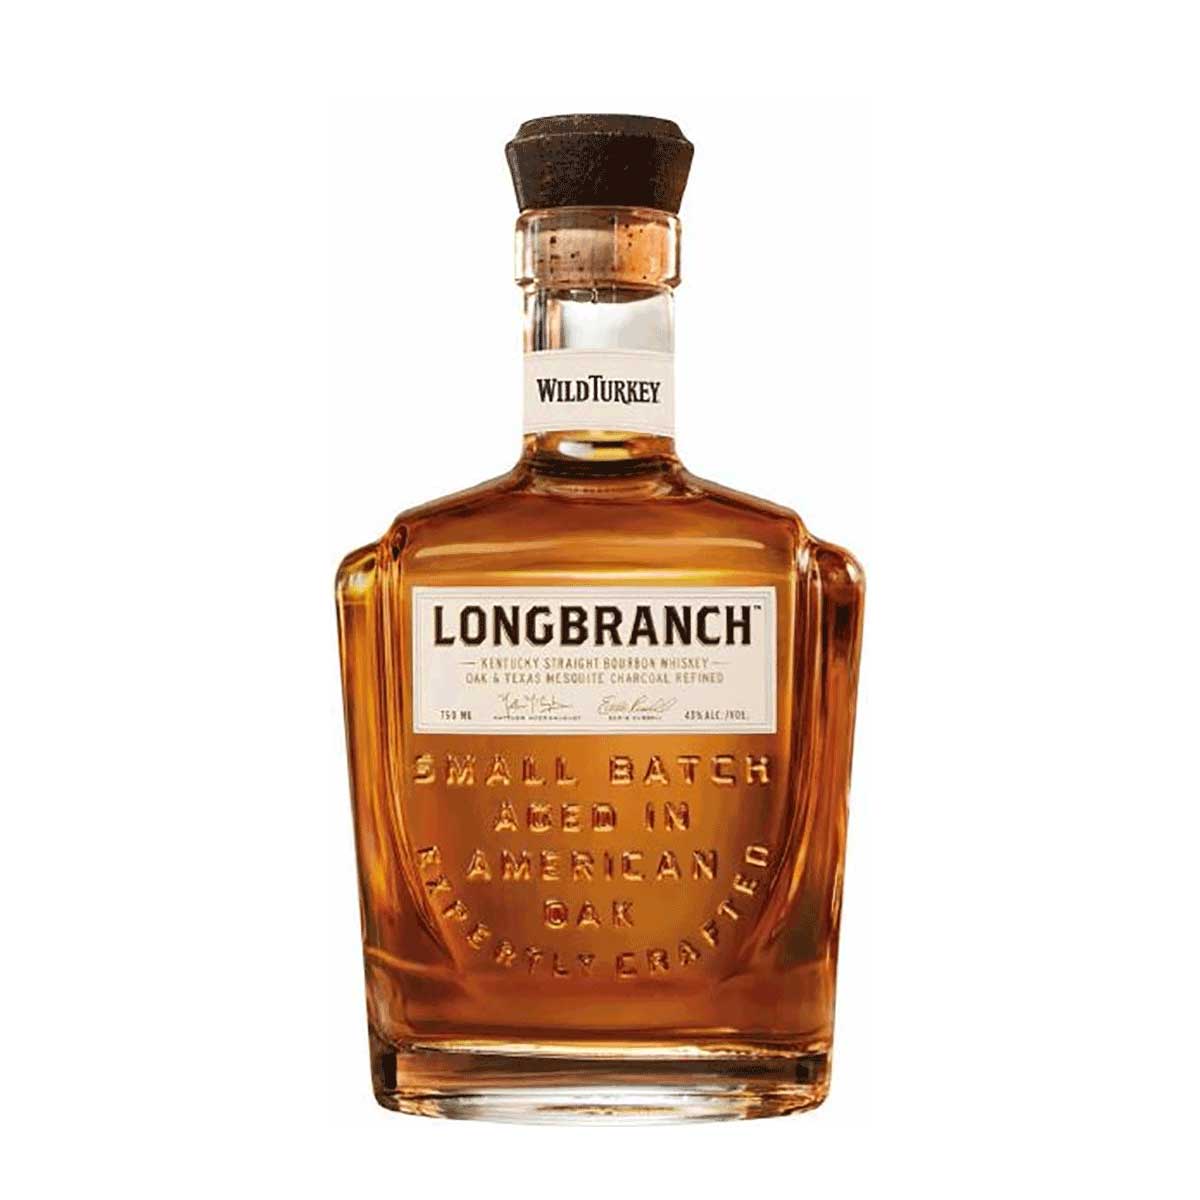 TAG Liquor Stores Delivery BC - Wild Turkey Longbranch Kentucky Straight Bourbon Whiskey 750ml